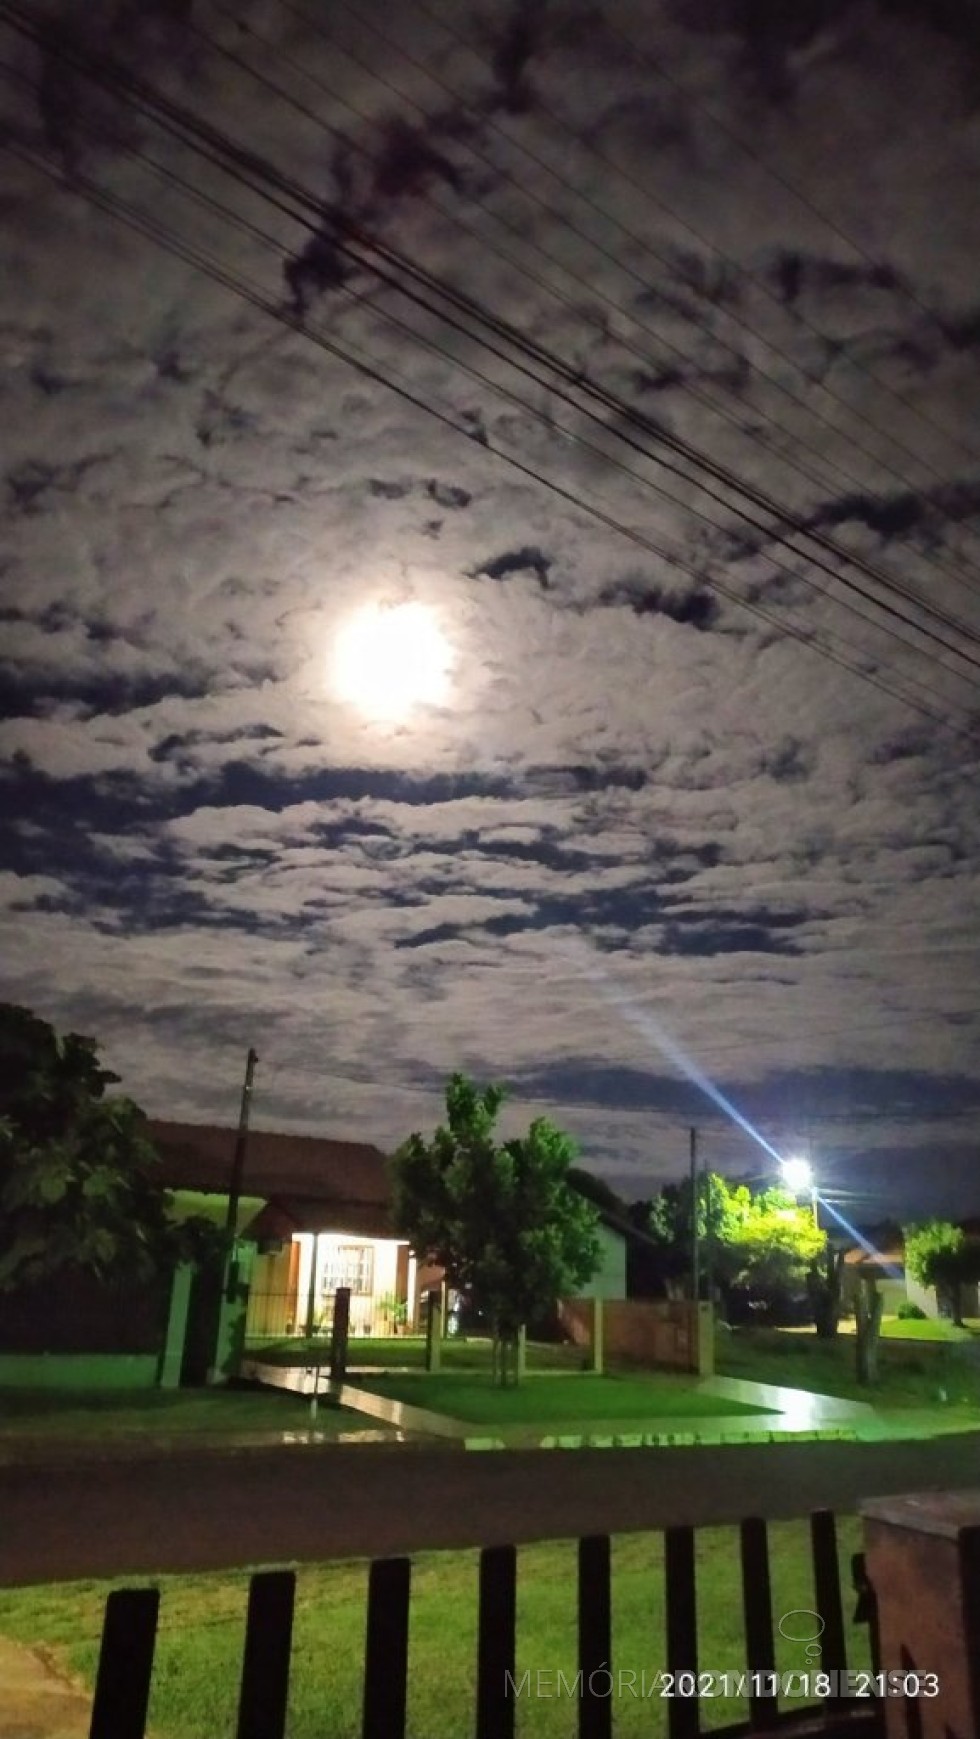  || Luar na cidade de Marechal Cândido Rondon (PR), às vésperas de Lua Cheia, às primeiras horas do anortecer de 18 de novembro de 2021.
Imagem: Acervo e crédito dea rondoennse Cleci (nascida Hardke) Dal Bello - FOTO 16 - 